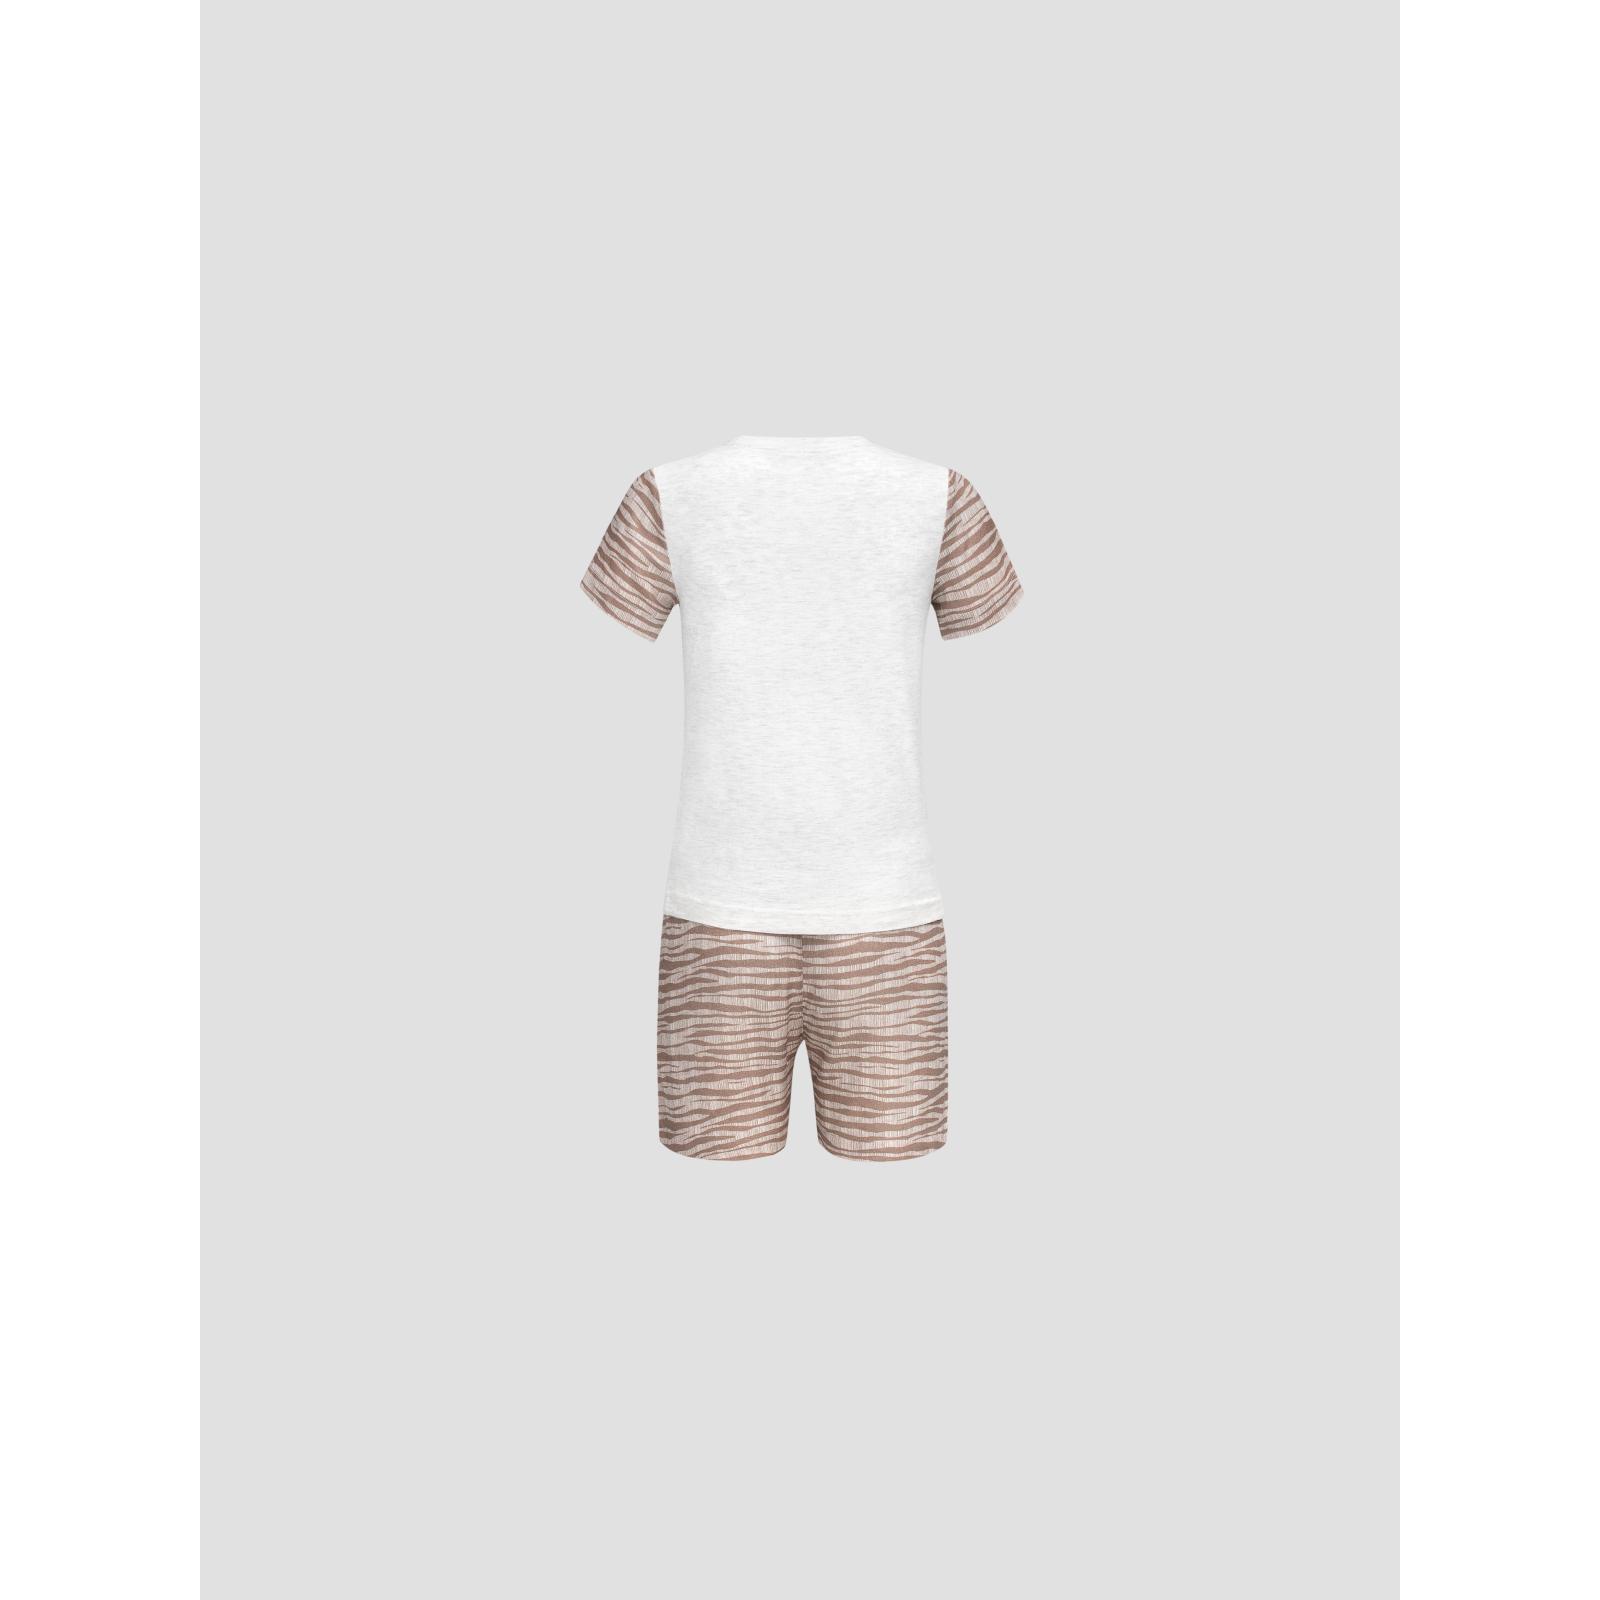 Пижама для мальчиков Kids by togas Сафари бежевый 92-98 см, размер 92-98 см - фото 2